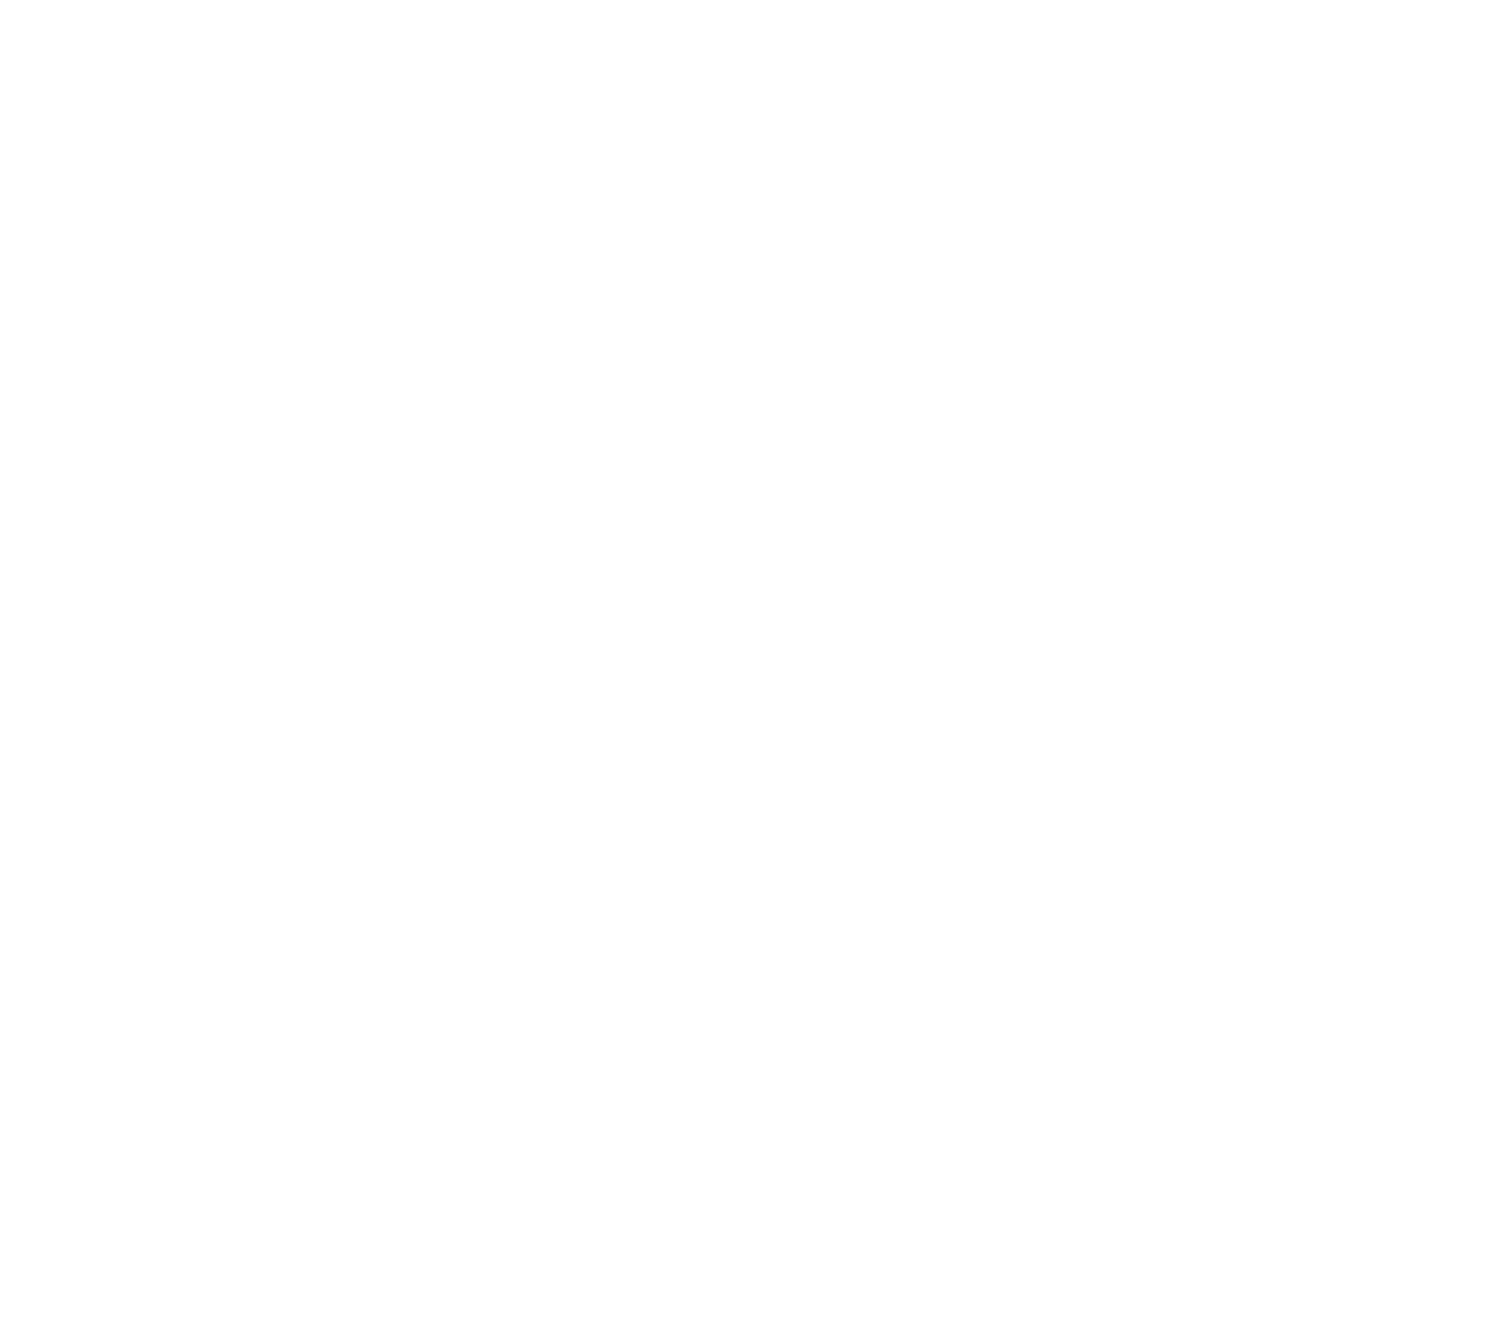 Westbury Methodist Day School